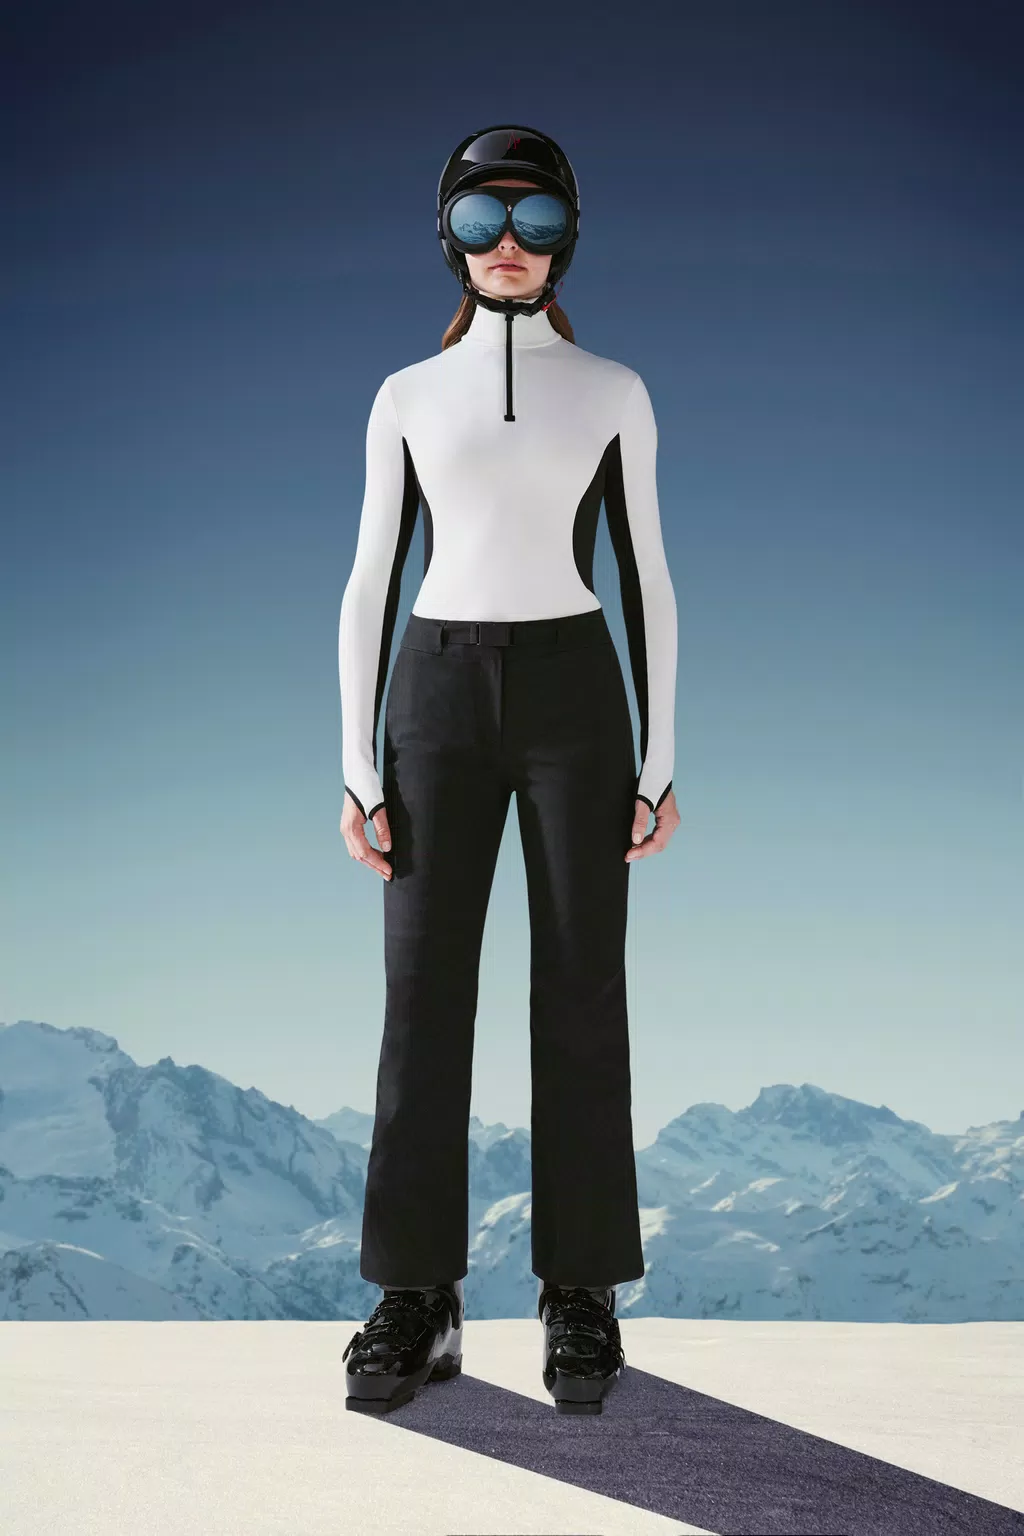 https://moncler-cdn.thron.com/delivery/public/image/moncler/I20982A6074053066999_X/dpx6uv/std/1024x1536/ski-trousers-women-black-moncler.jpg?scalemode=centered&adjustcrop=reduce&quality=80&format=WEBP